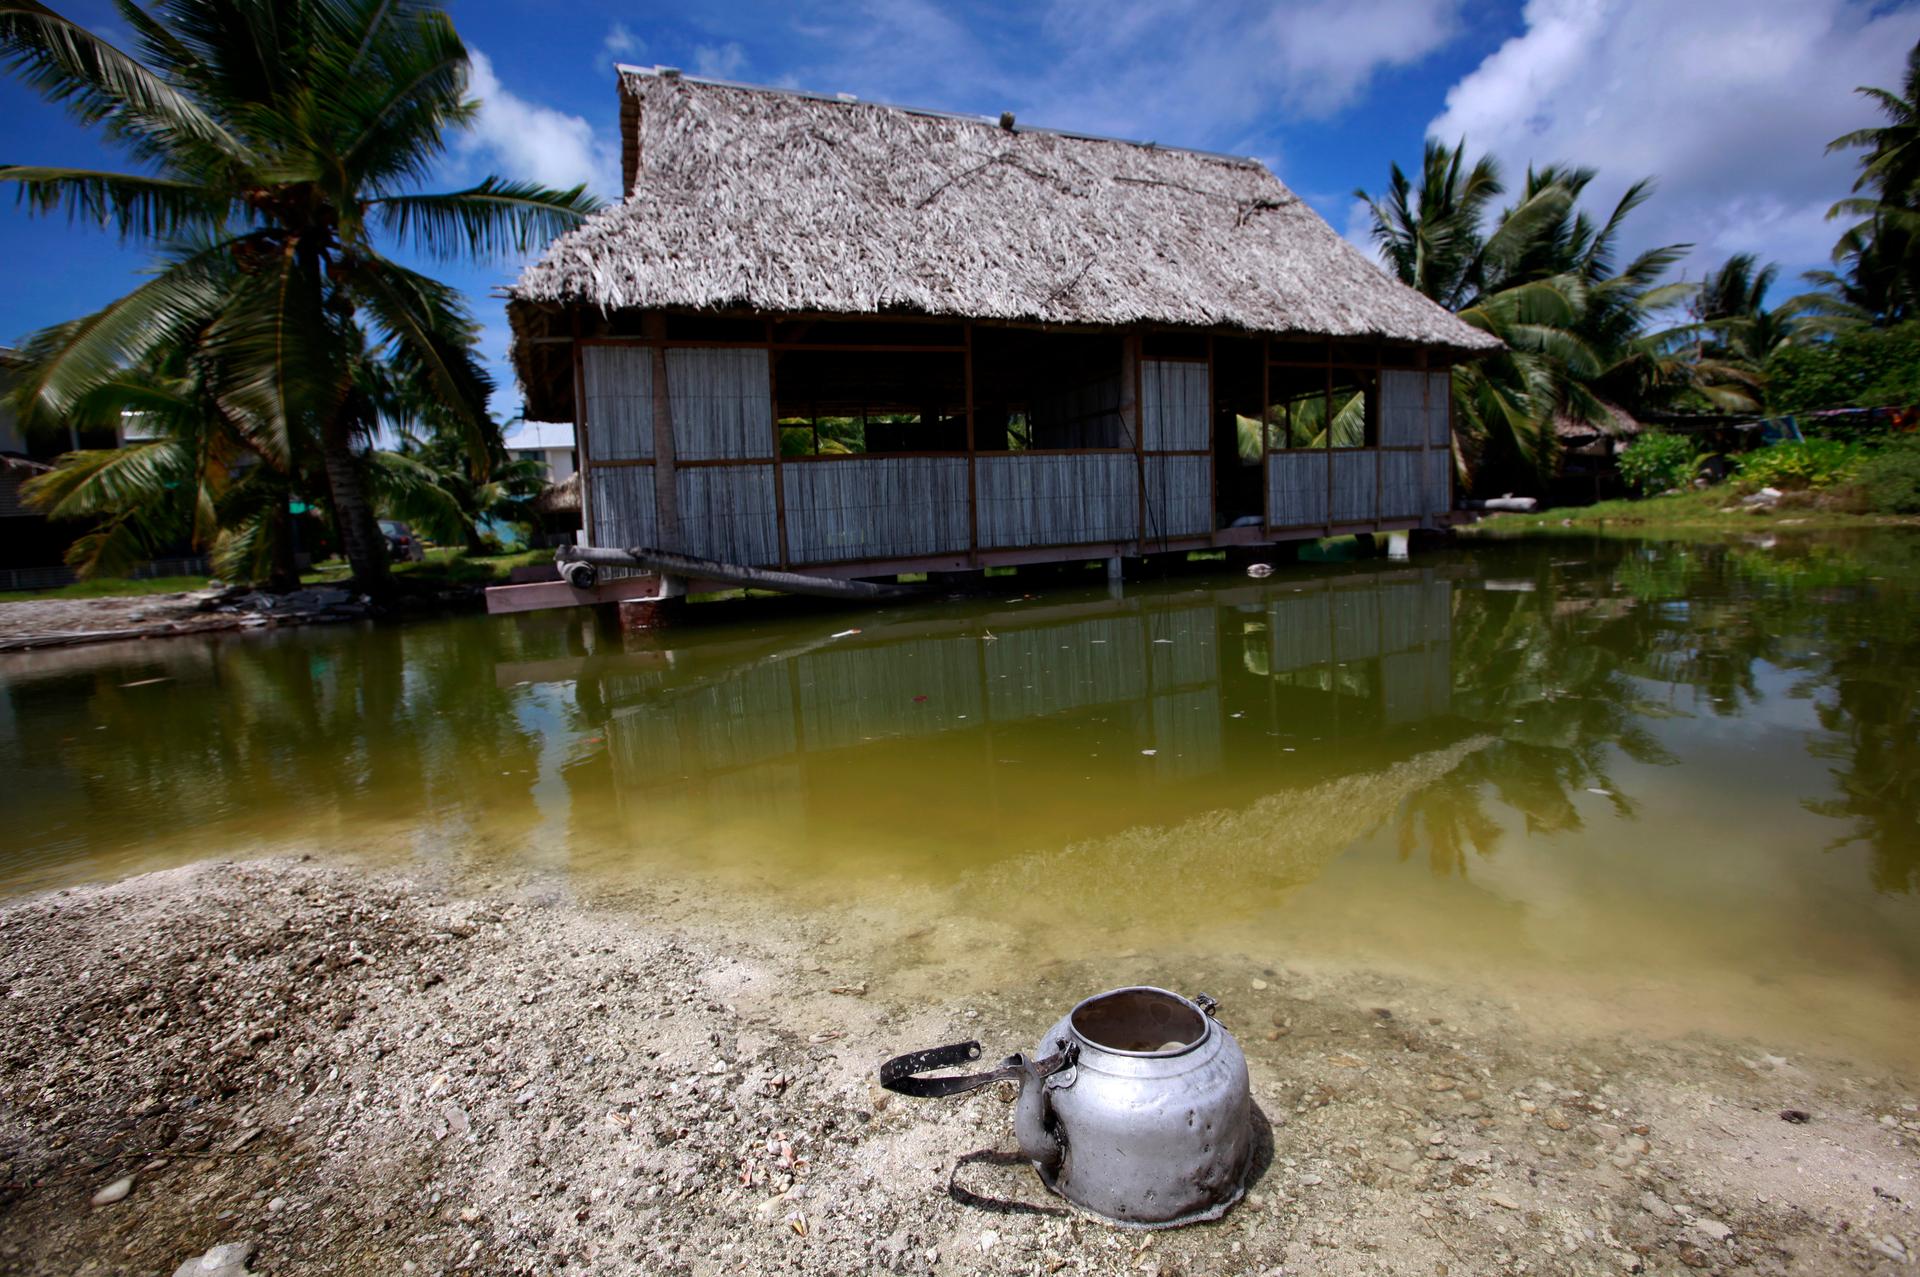 Seawater flooding in Kiribati